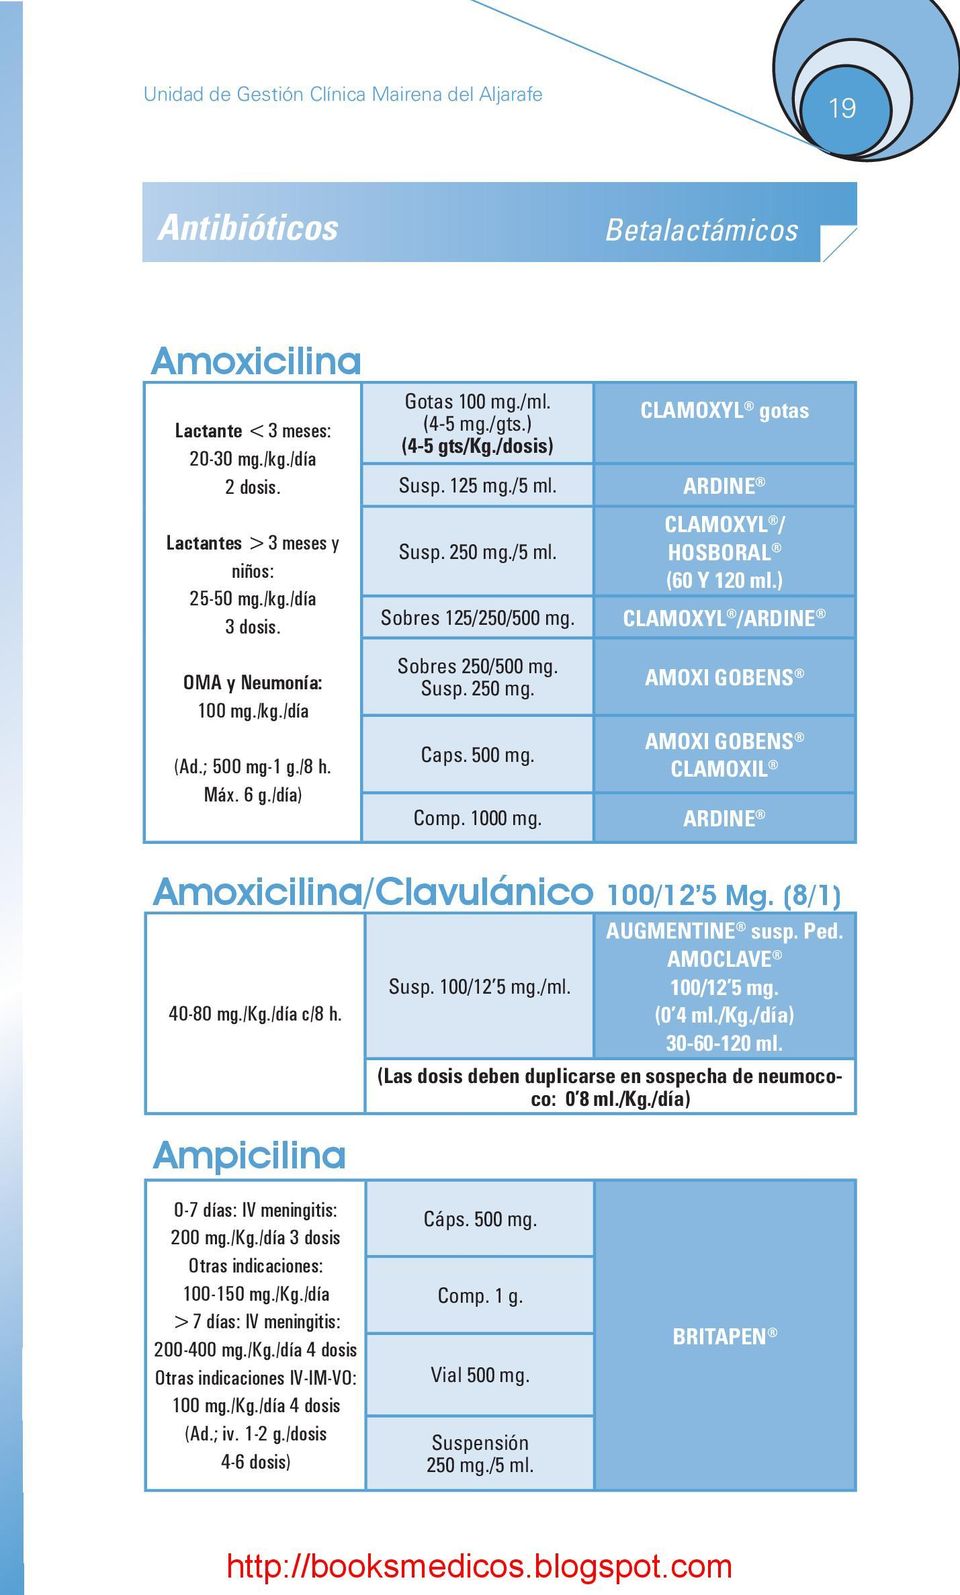 ) Sobres 125/250/500 mg. CLAMOXYL /ARDINE Sobres 250/500 mg. Susp. 250 mg. Caps. 500 mg. AMOXI GOBENS AMOXI GOBENS CLAMOXIL Comp. 1000 mg. ARDINE Amoxicilina/Clavulánico 100/12 5 Mg. (8/1) 40-80 mg.